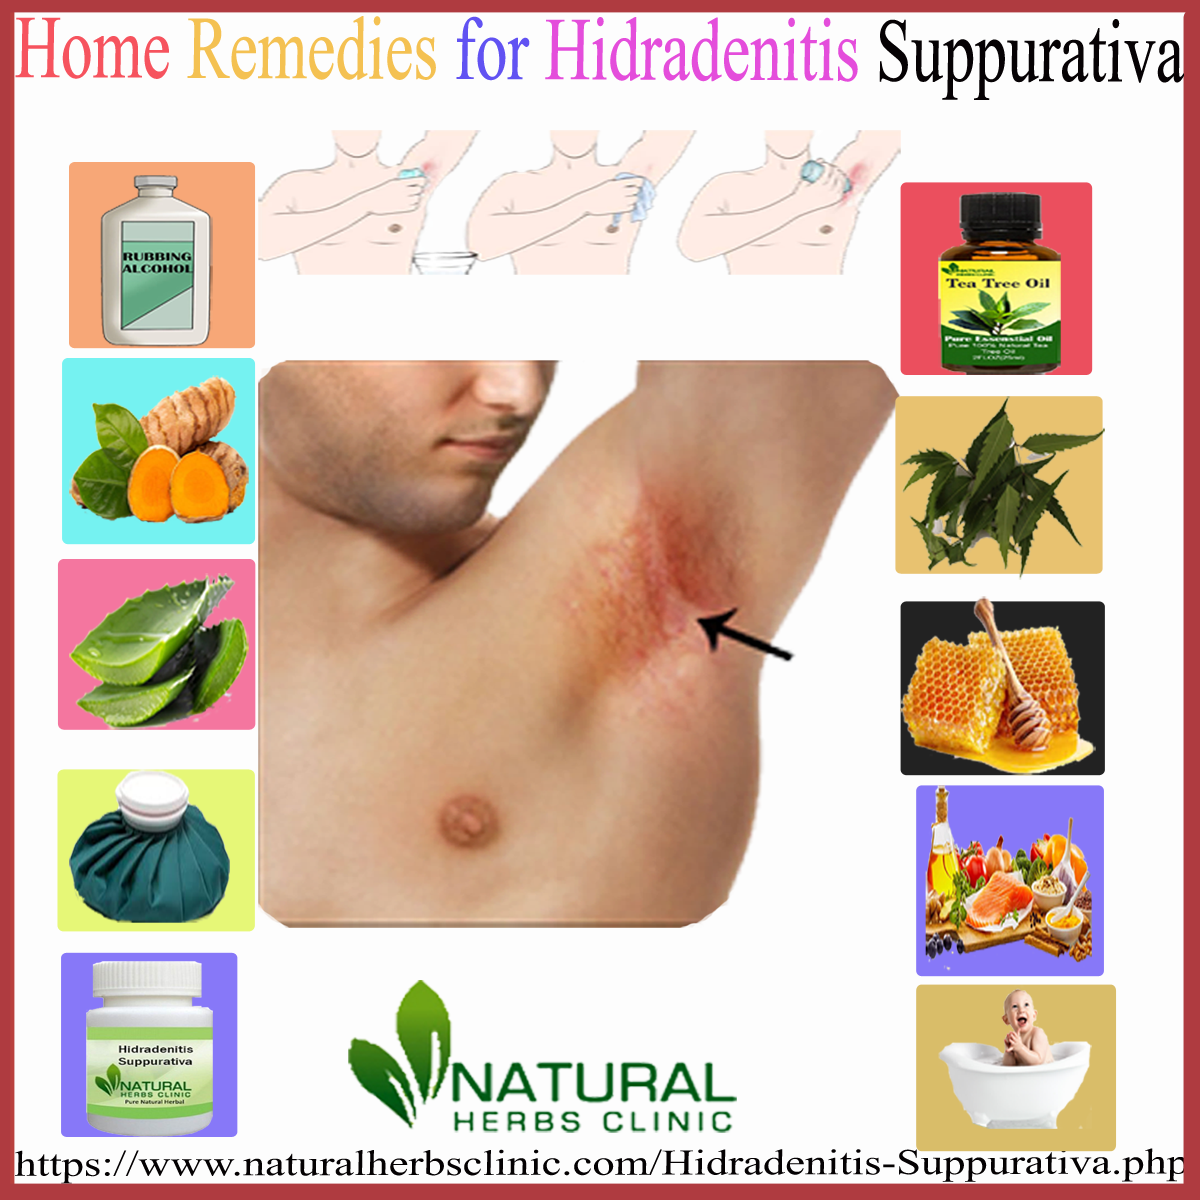 Home Remedies for Hidradenitis Suppurativa